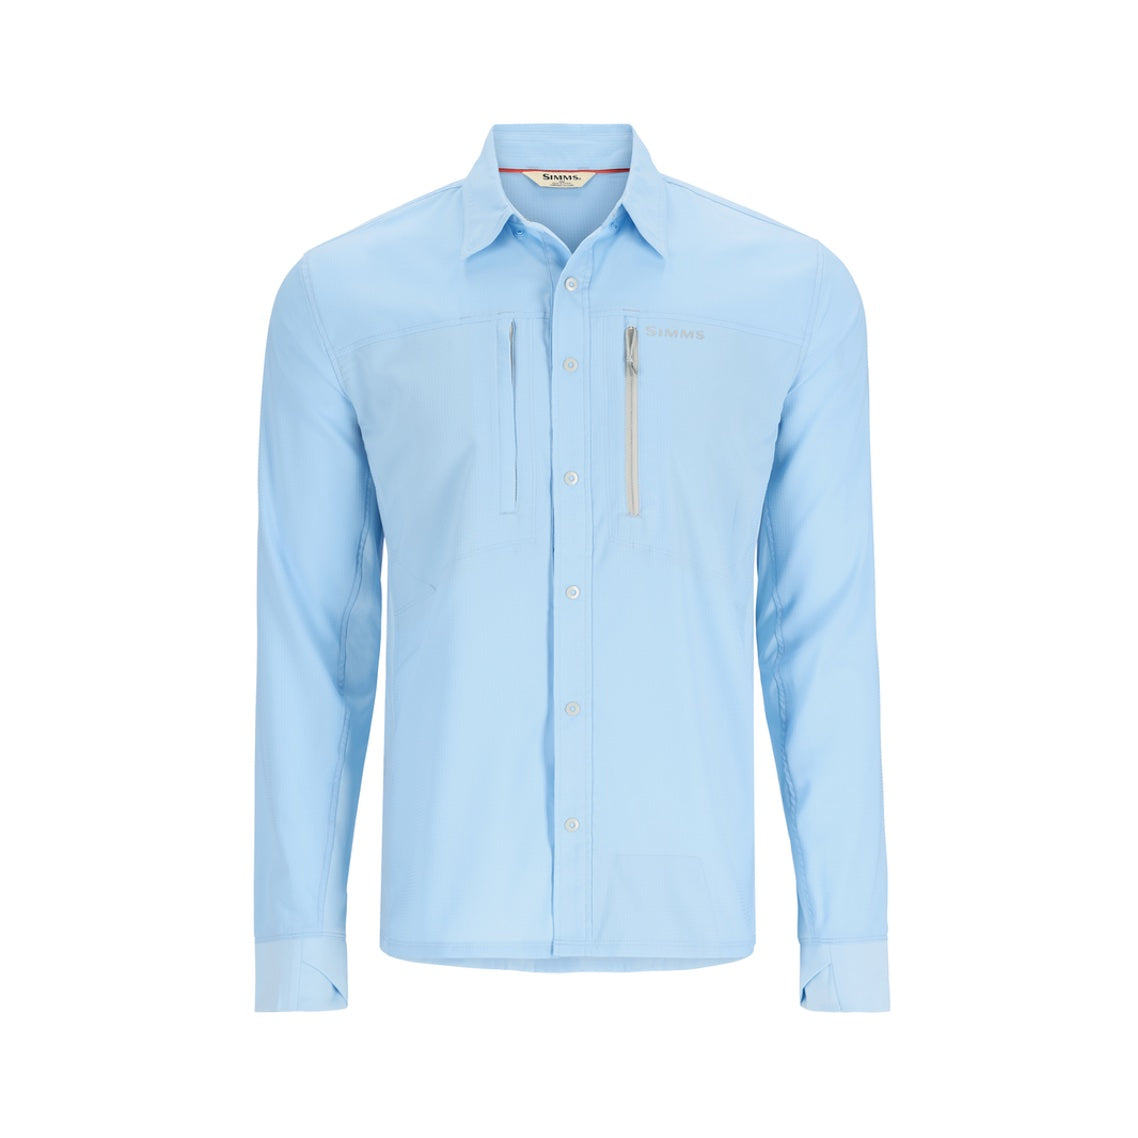 Simms Men's Fishing T-Shirt Size Large Blue Short Sleeve